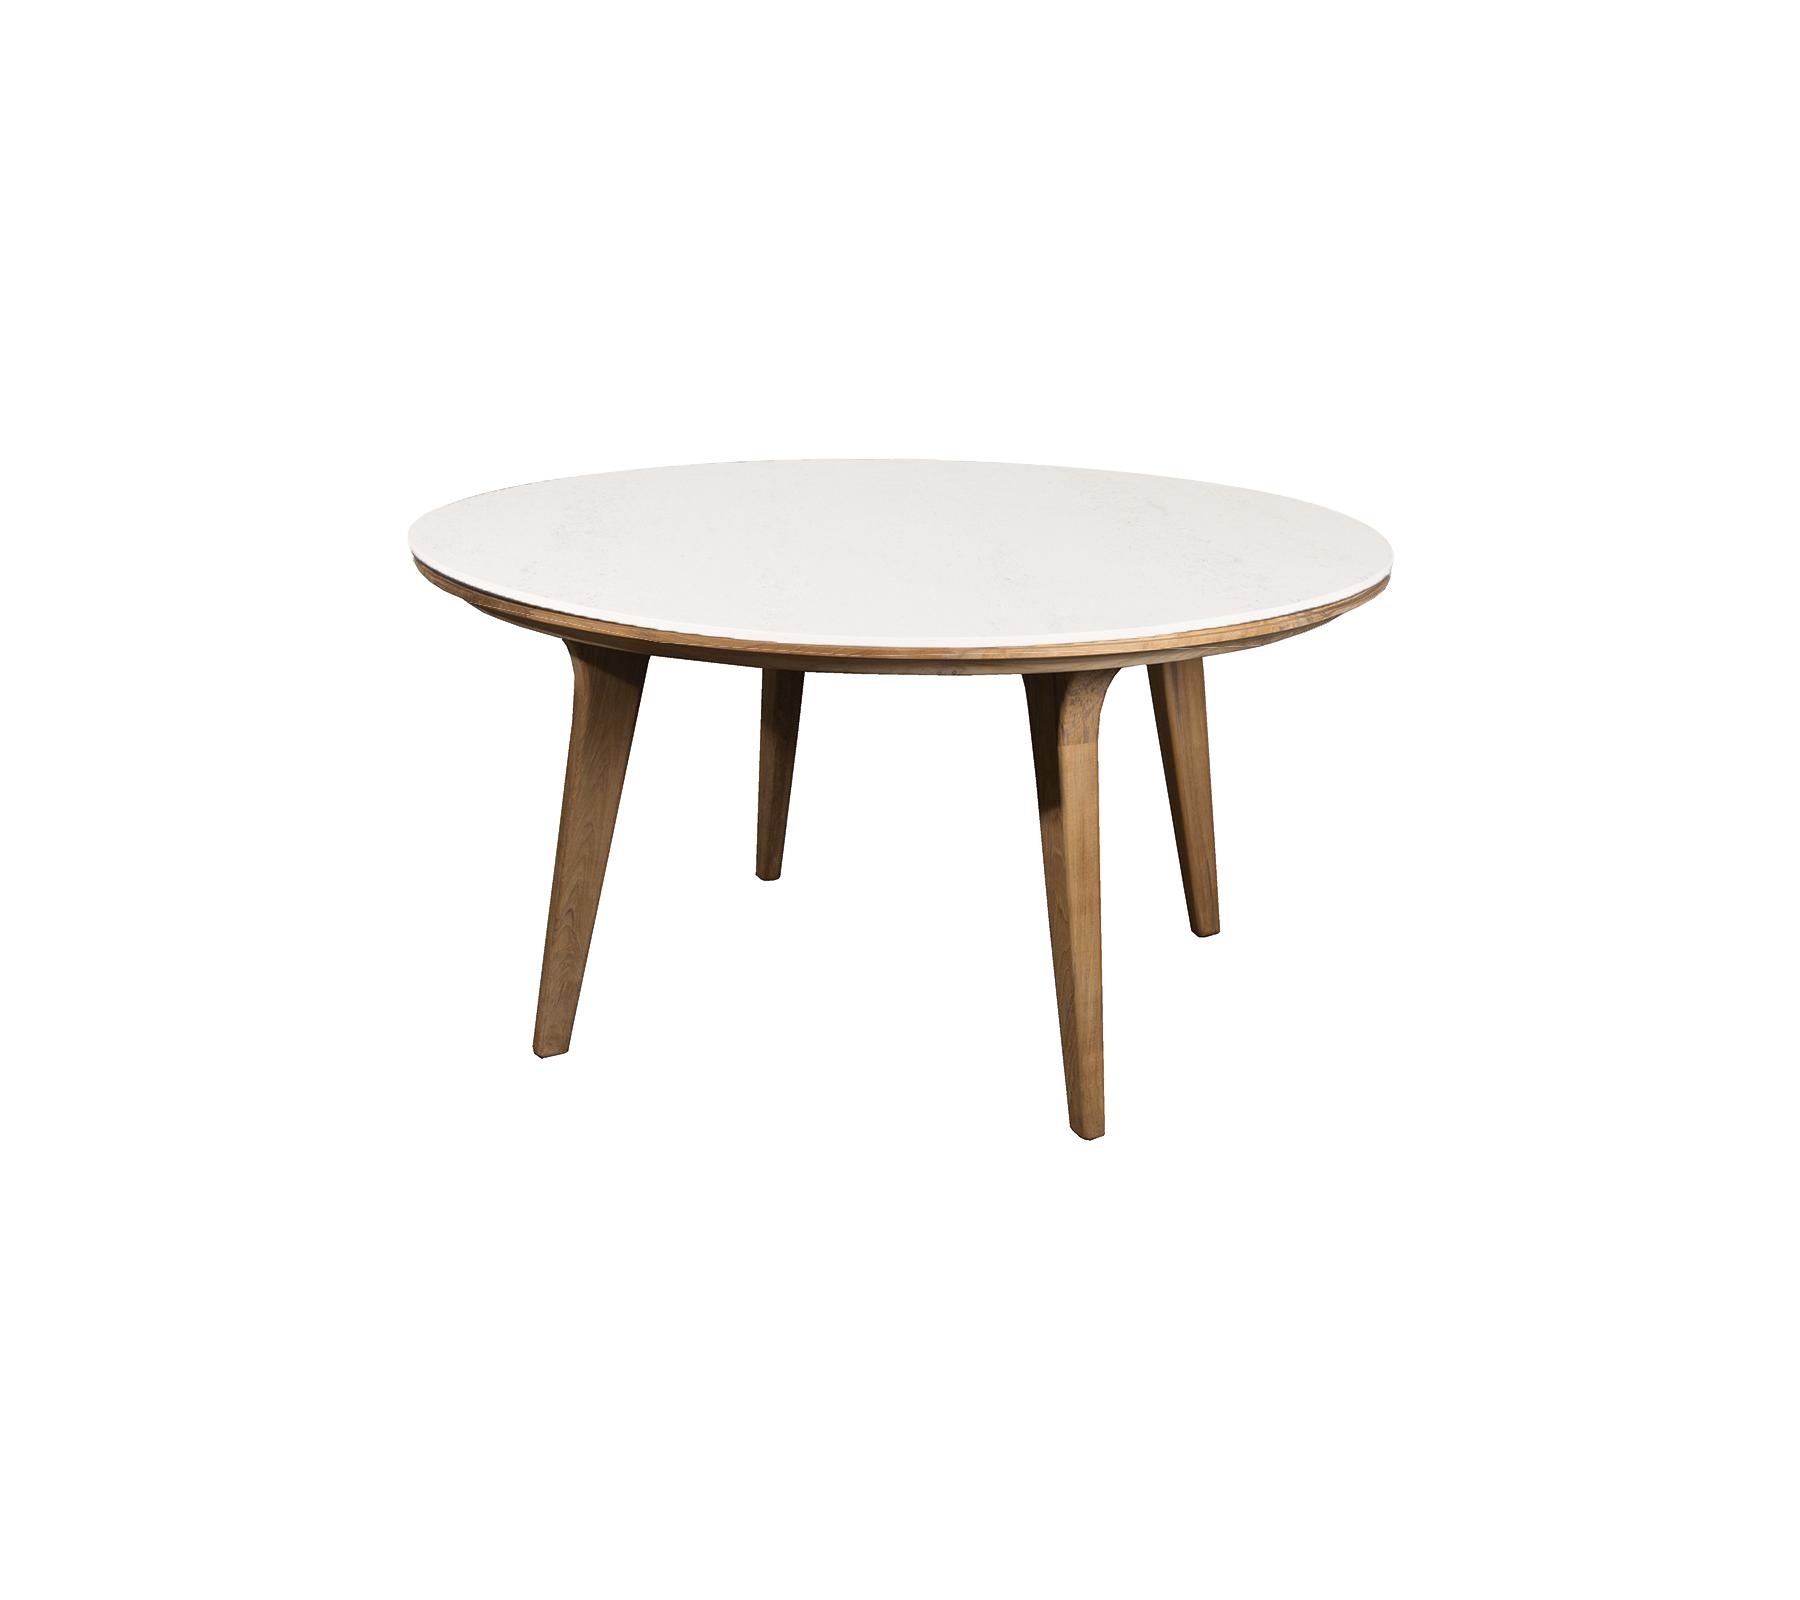 Cane-Line - Aspect dining table, dia. 144 cm - 50804T